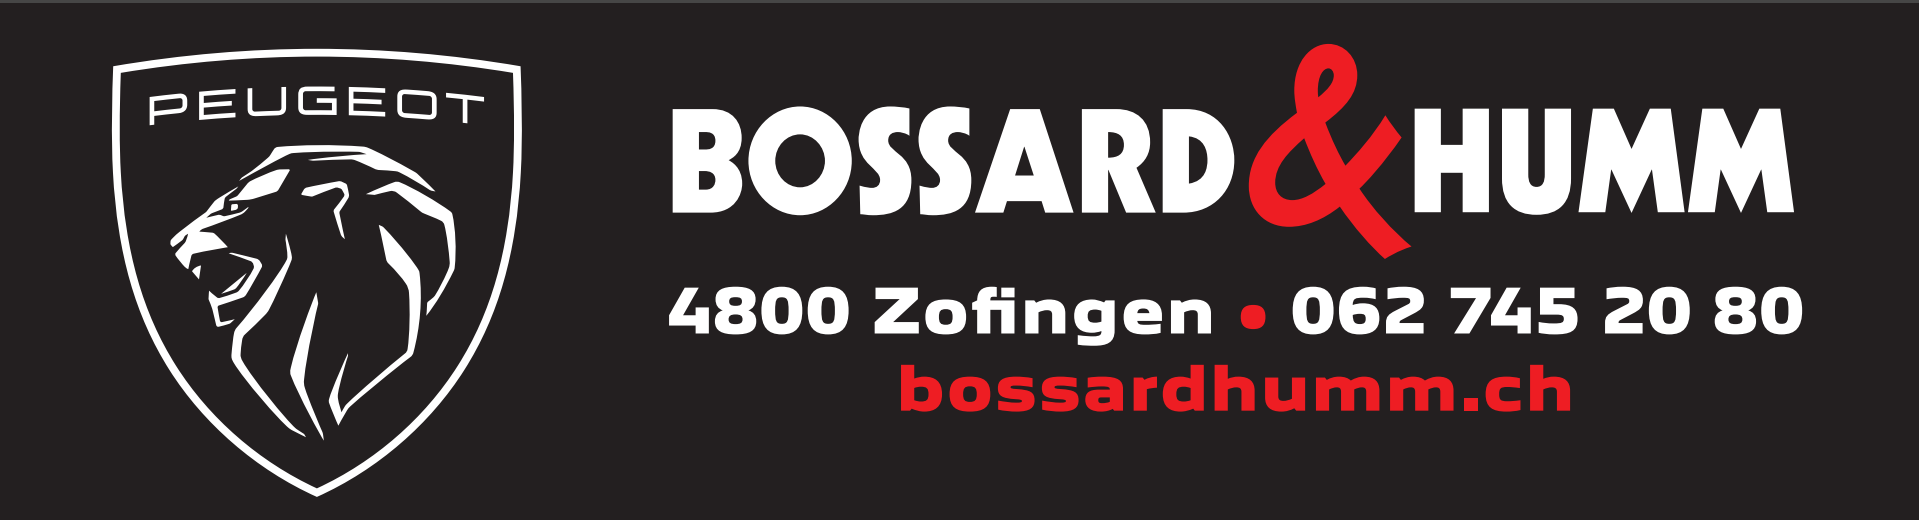 Bossard & Humm GmbH, Zofingen